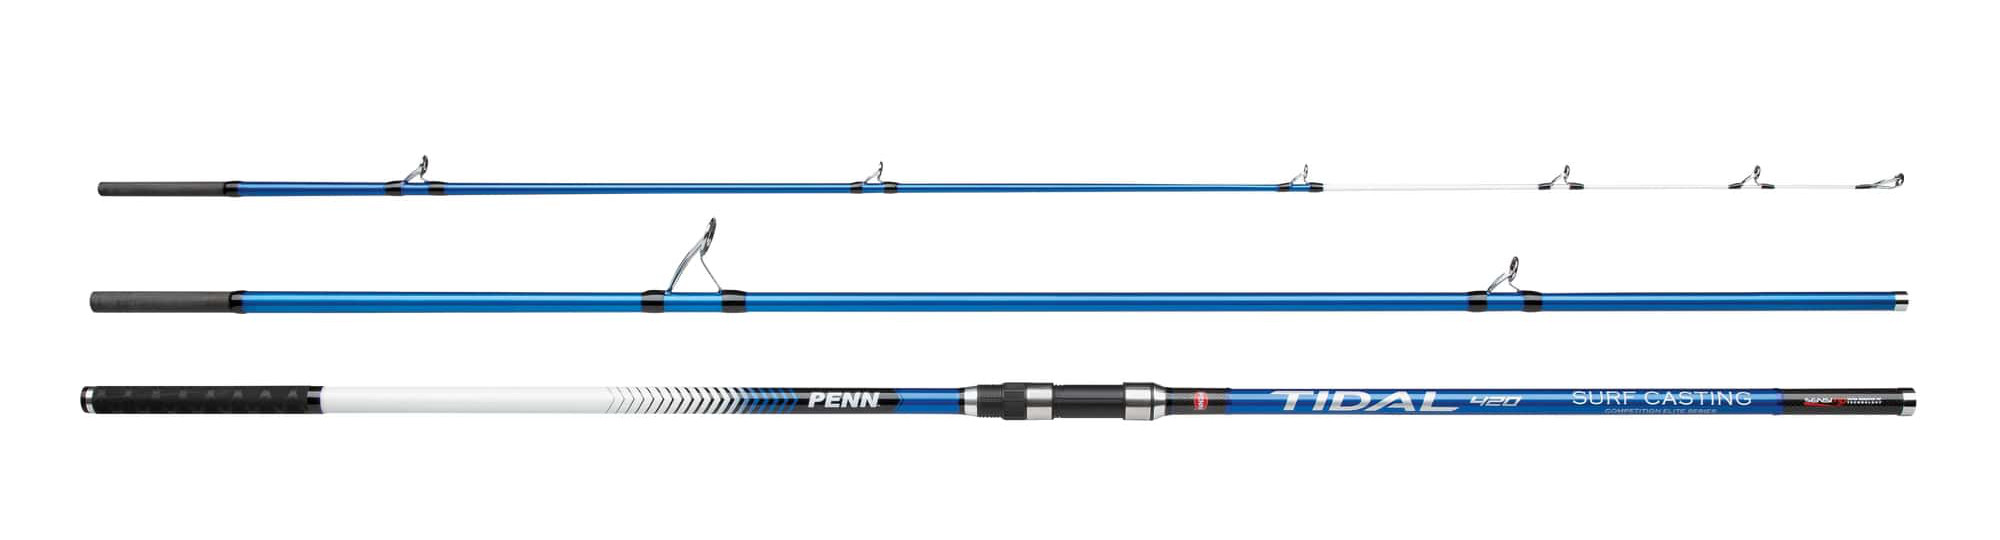 Penn Tidal Surfcasting Rod